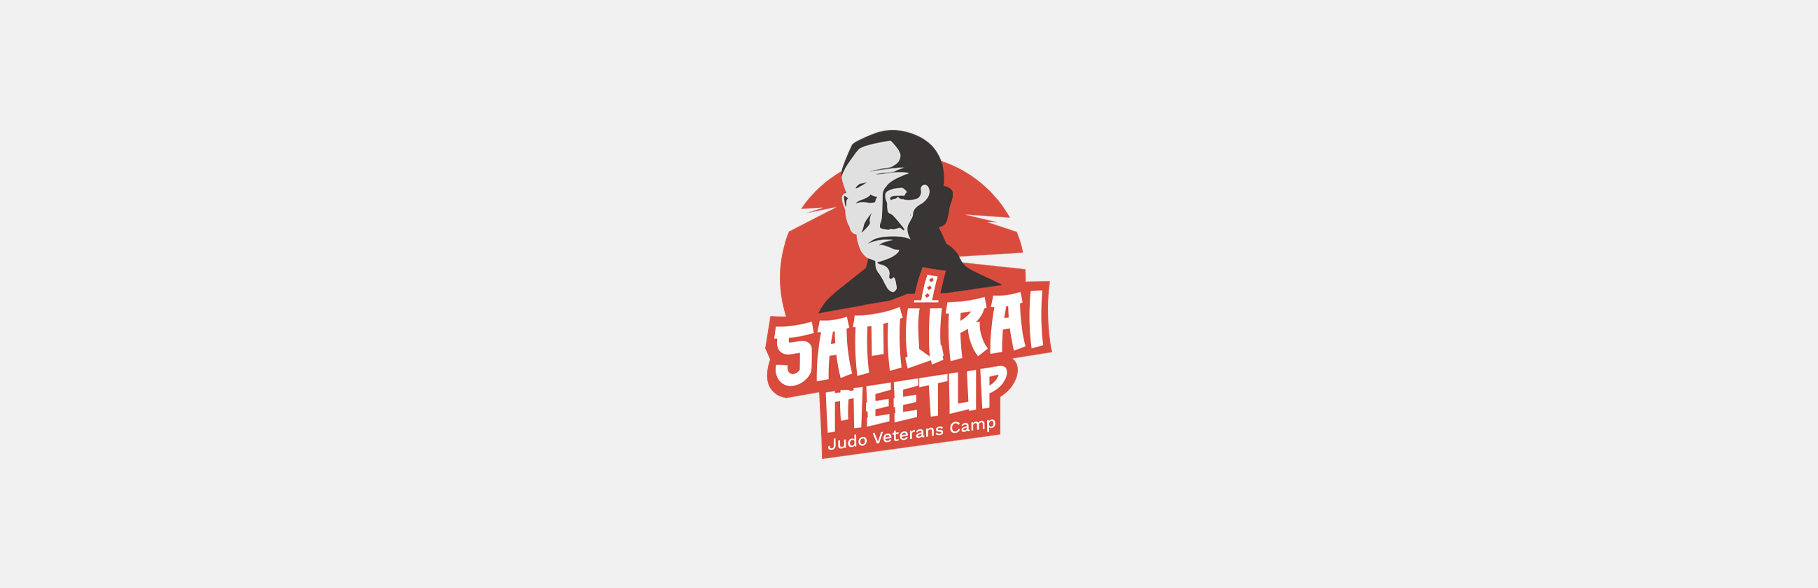 Samurai MeetUp